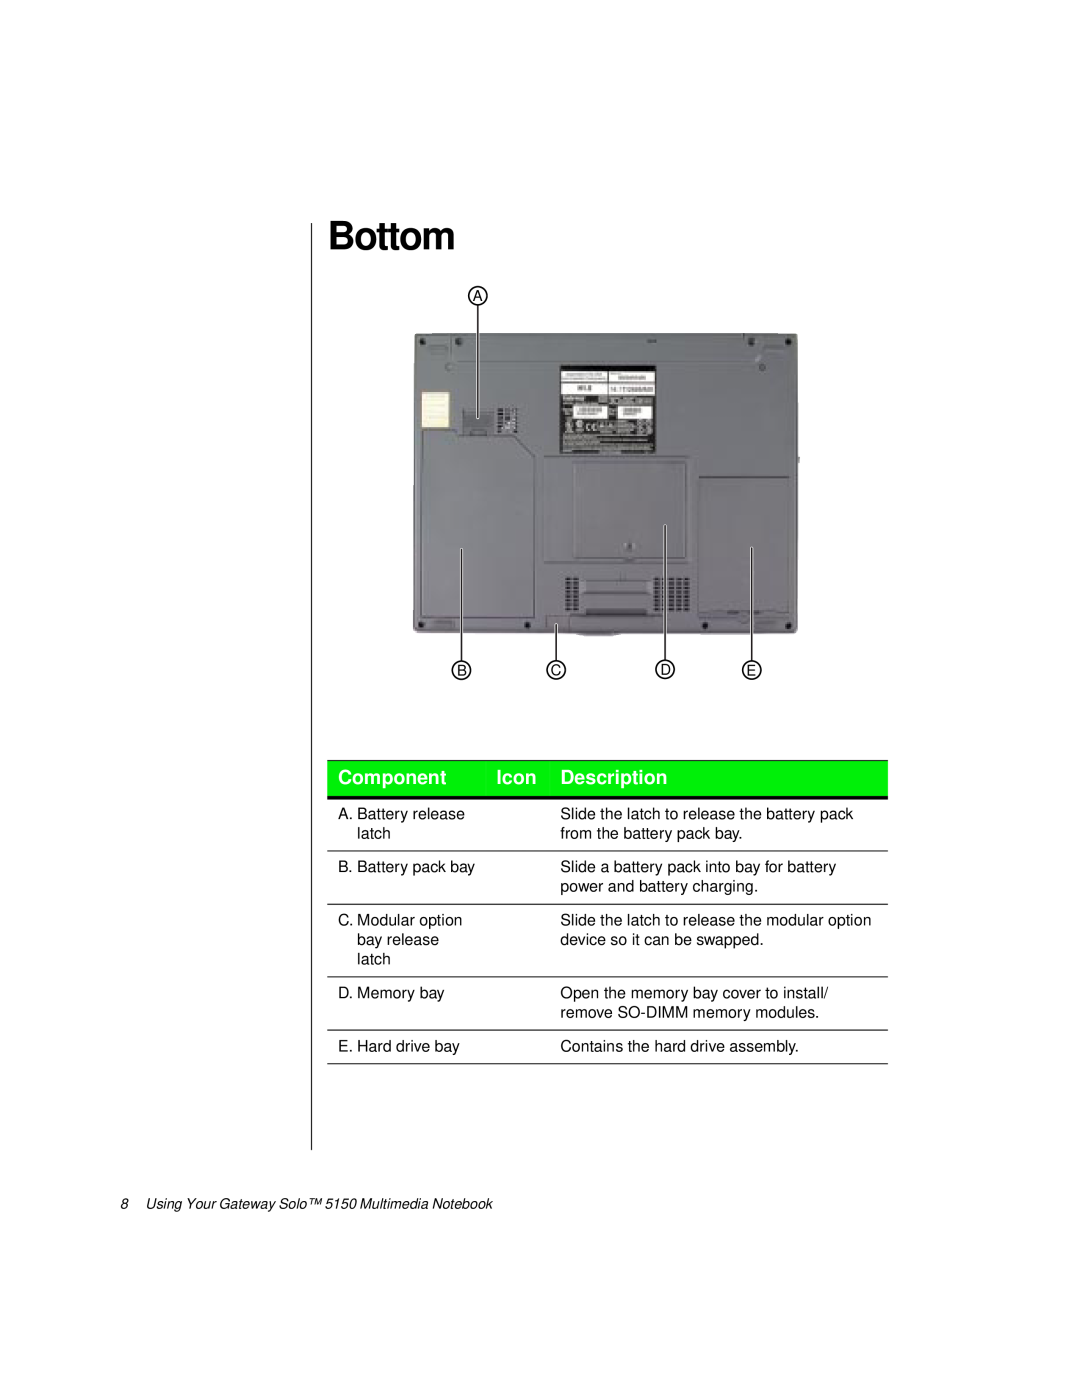 Gateway TM 5150 manual Bottom, Component, Icon Description, Using Your Gateway Solo 5150 Multimedia Notebook 